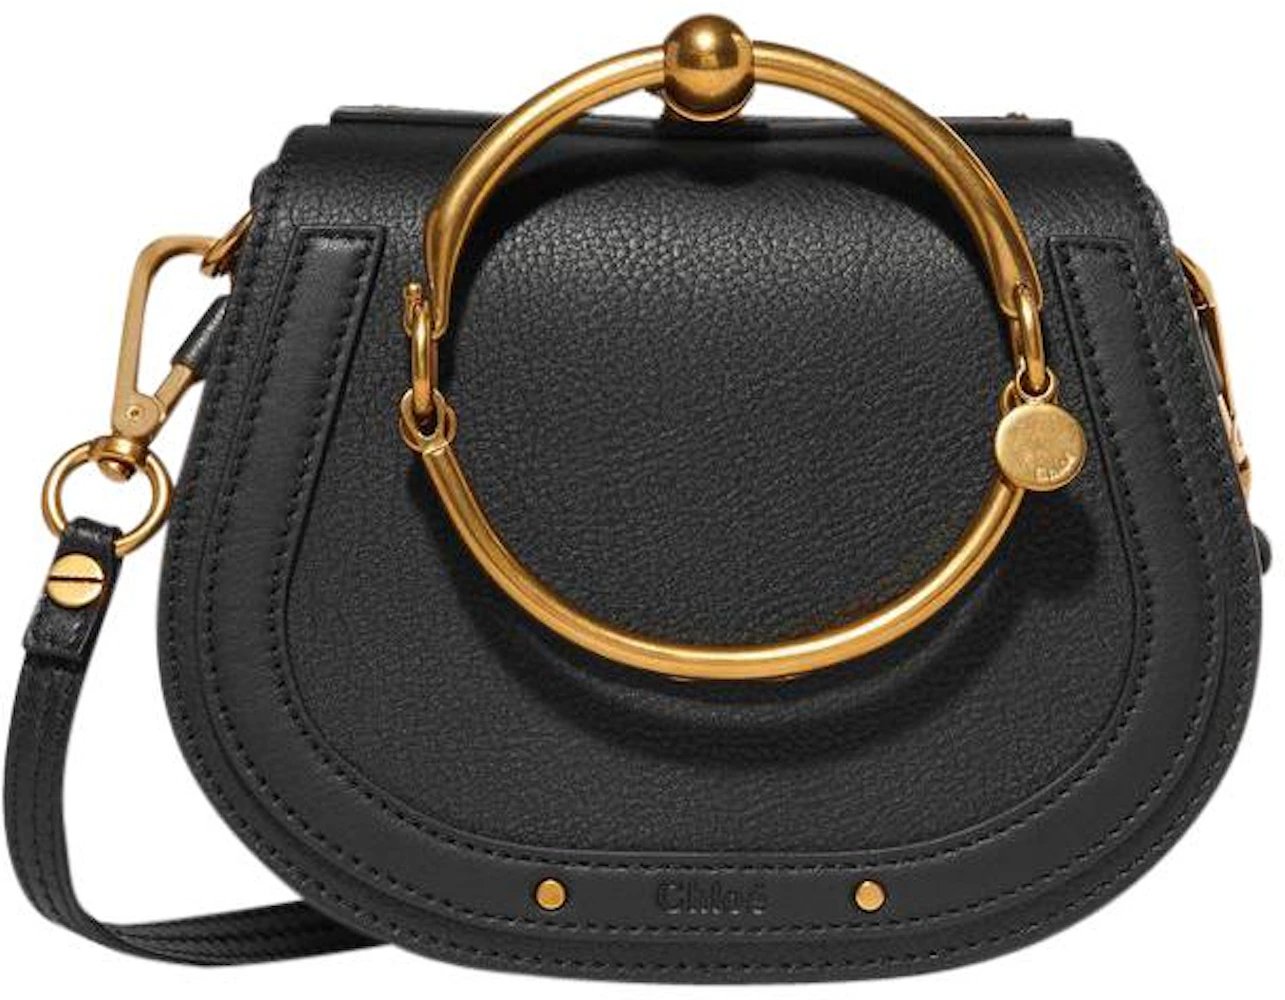 Chloe Nile Bracelet Leather Crossbody Bag Blue - Shop Now